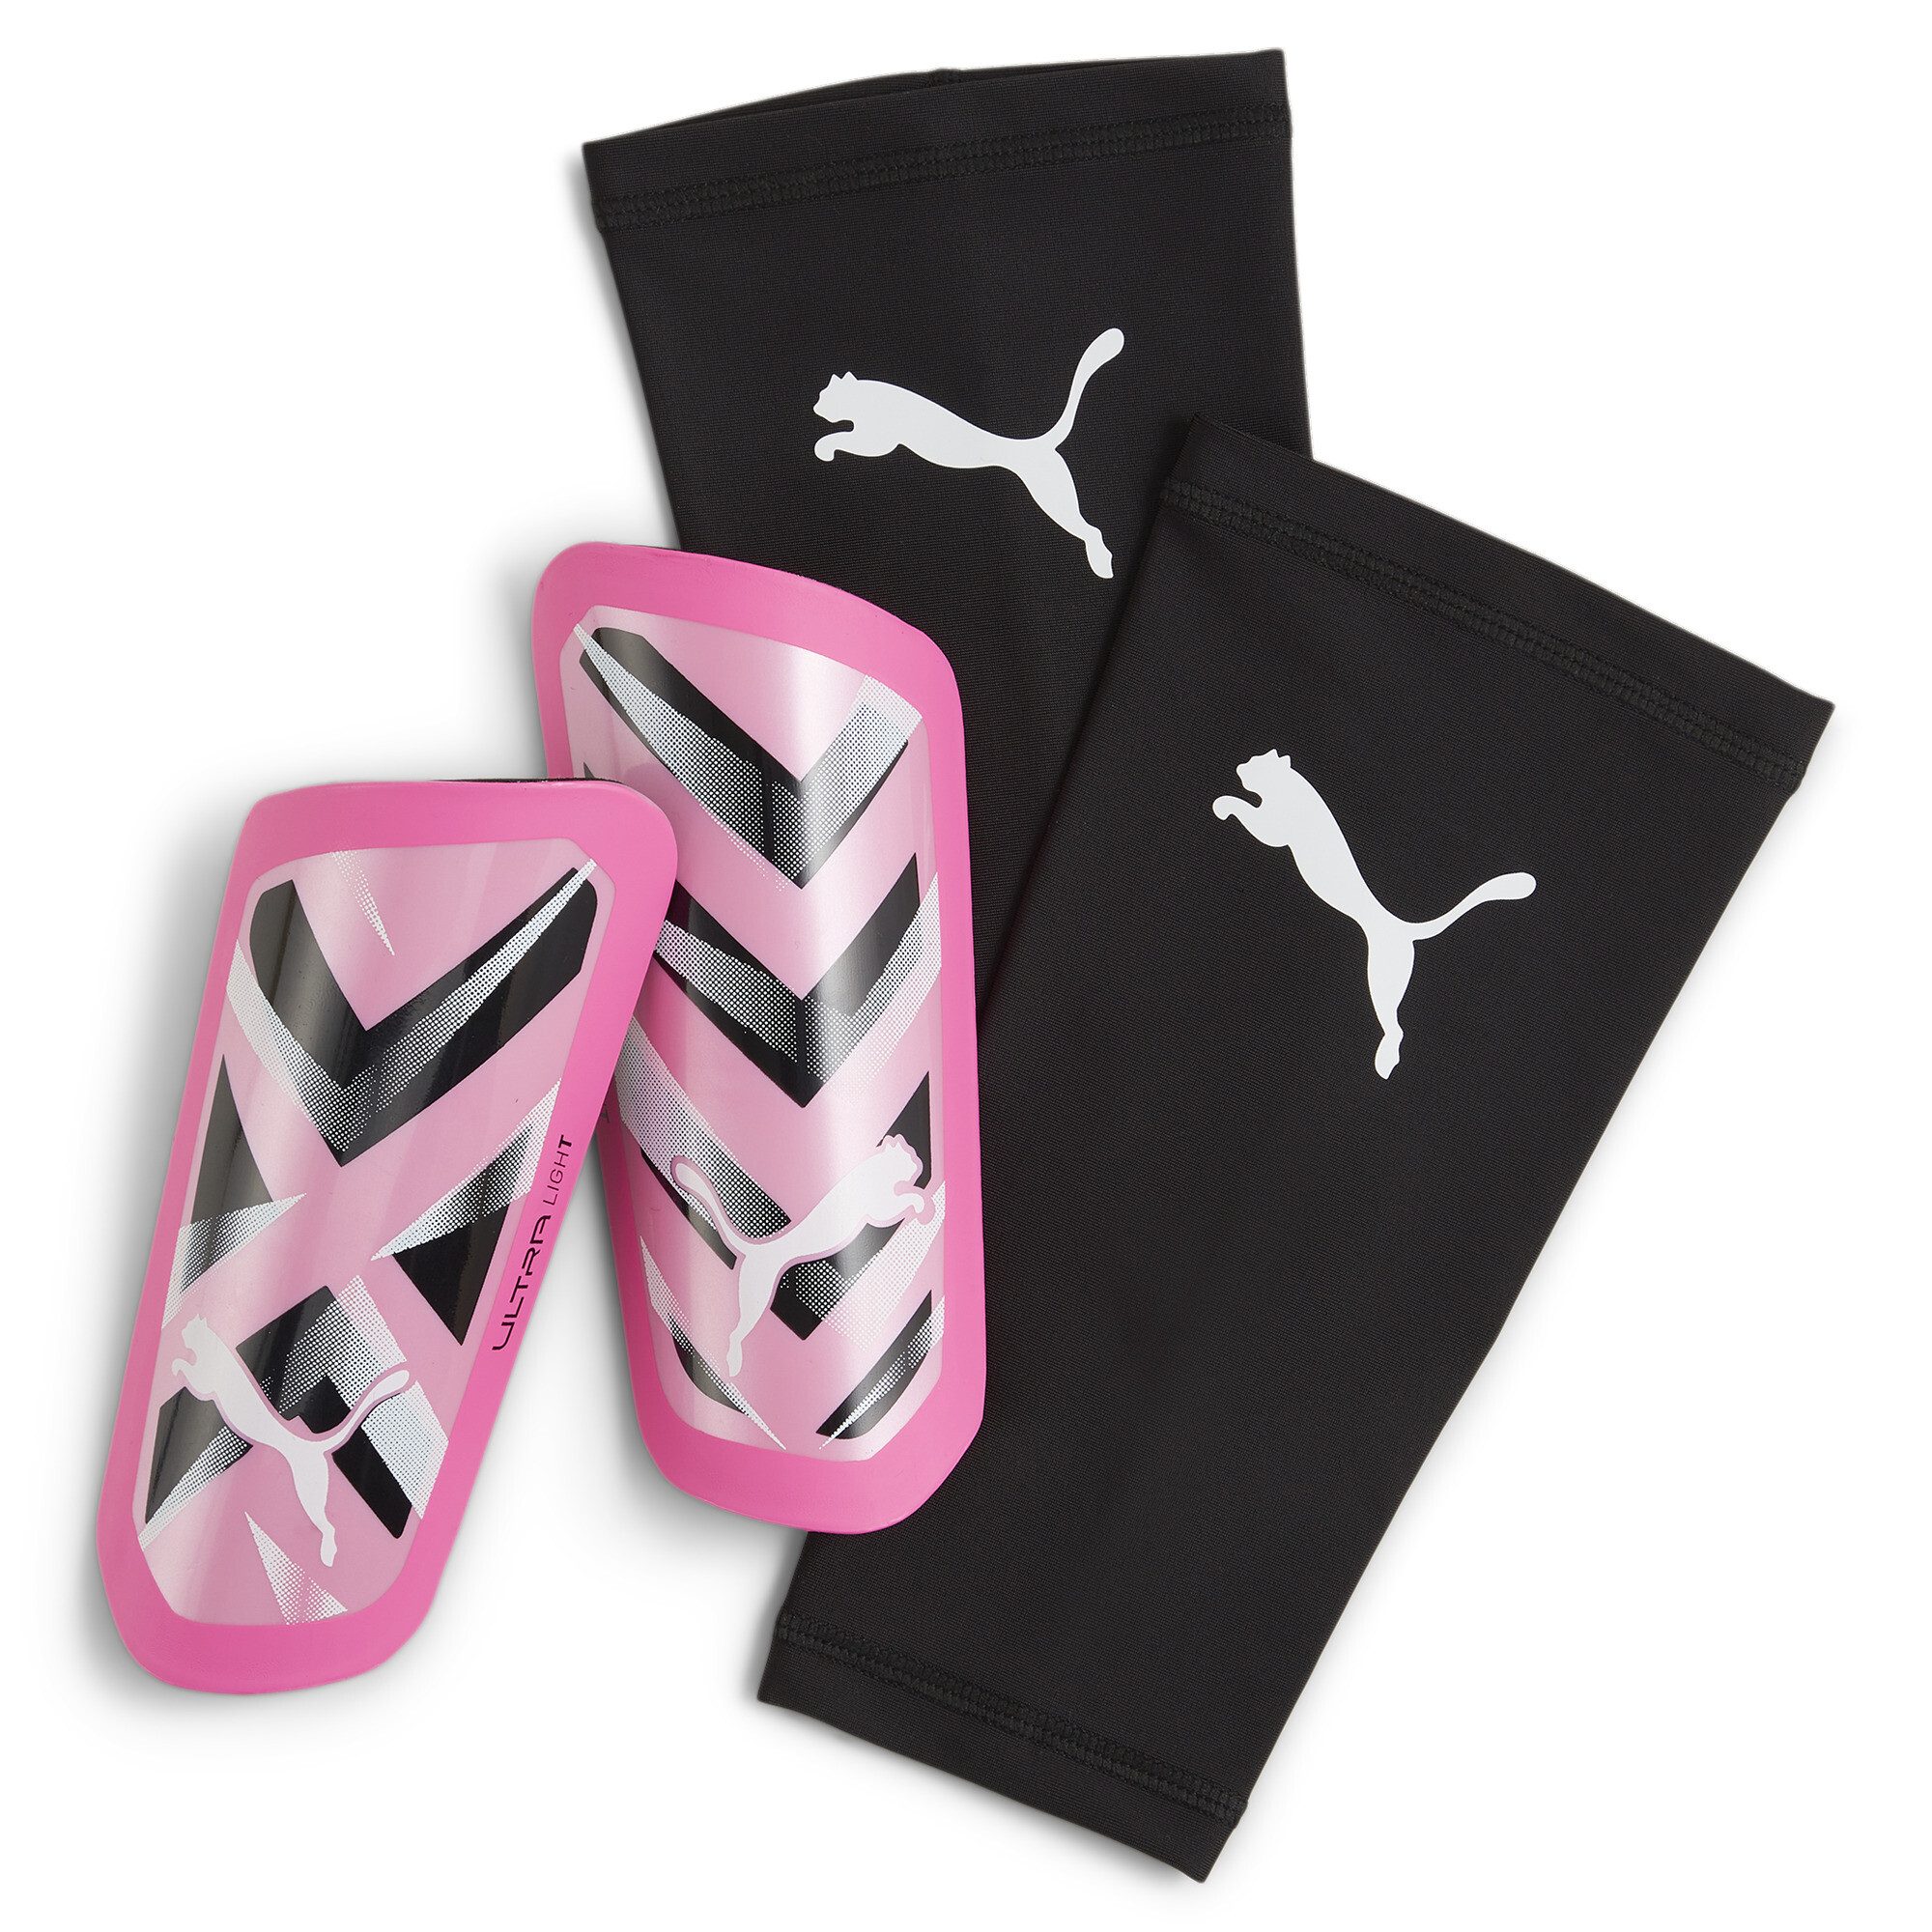 Puma ULTRA Light Sleeve Football Shin Guards, Pink, Size XL, Accessories